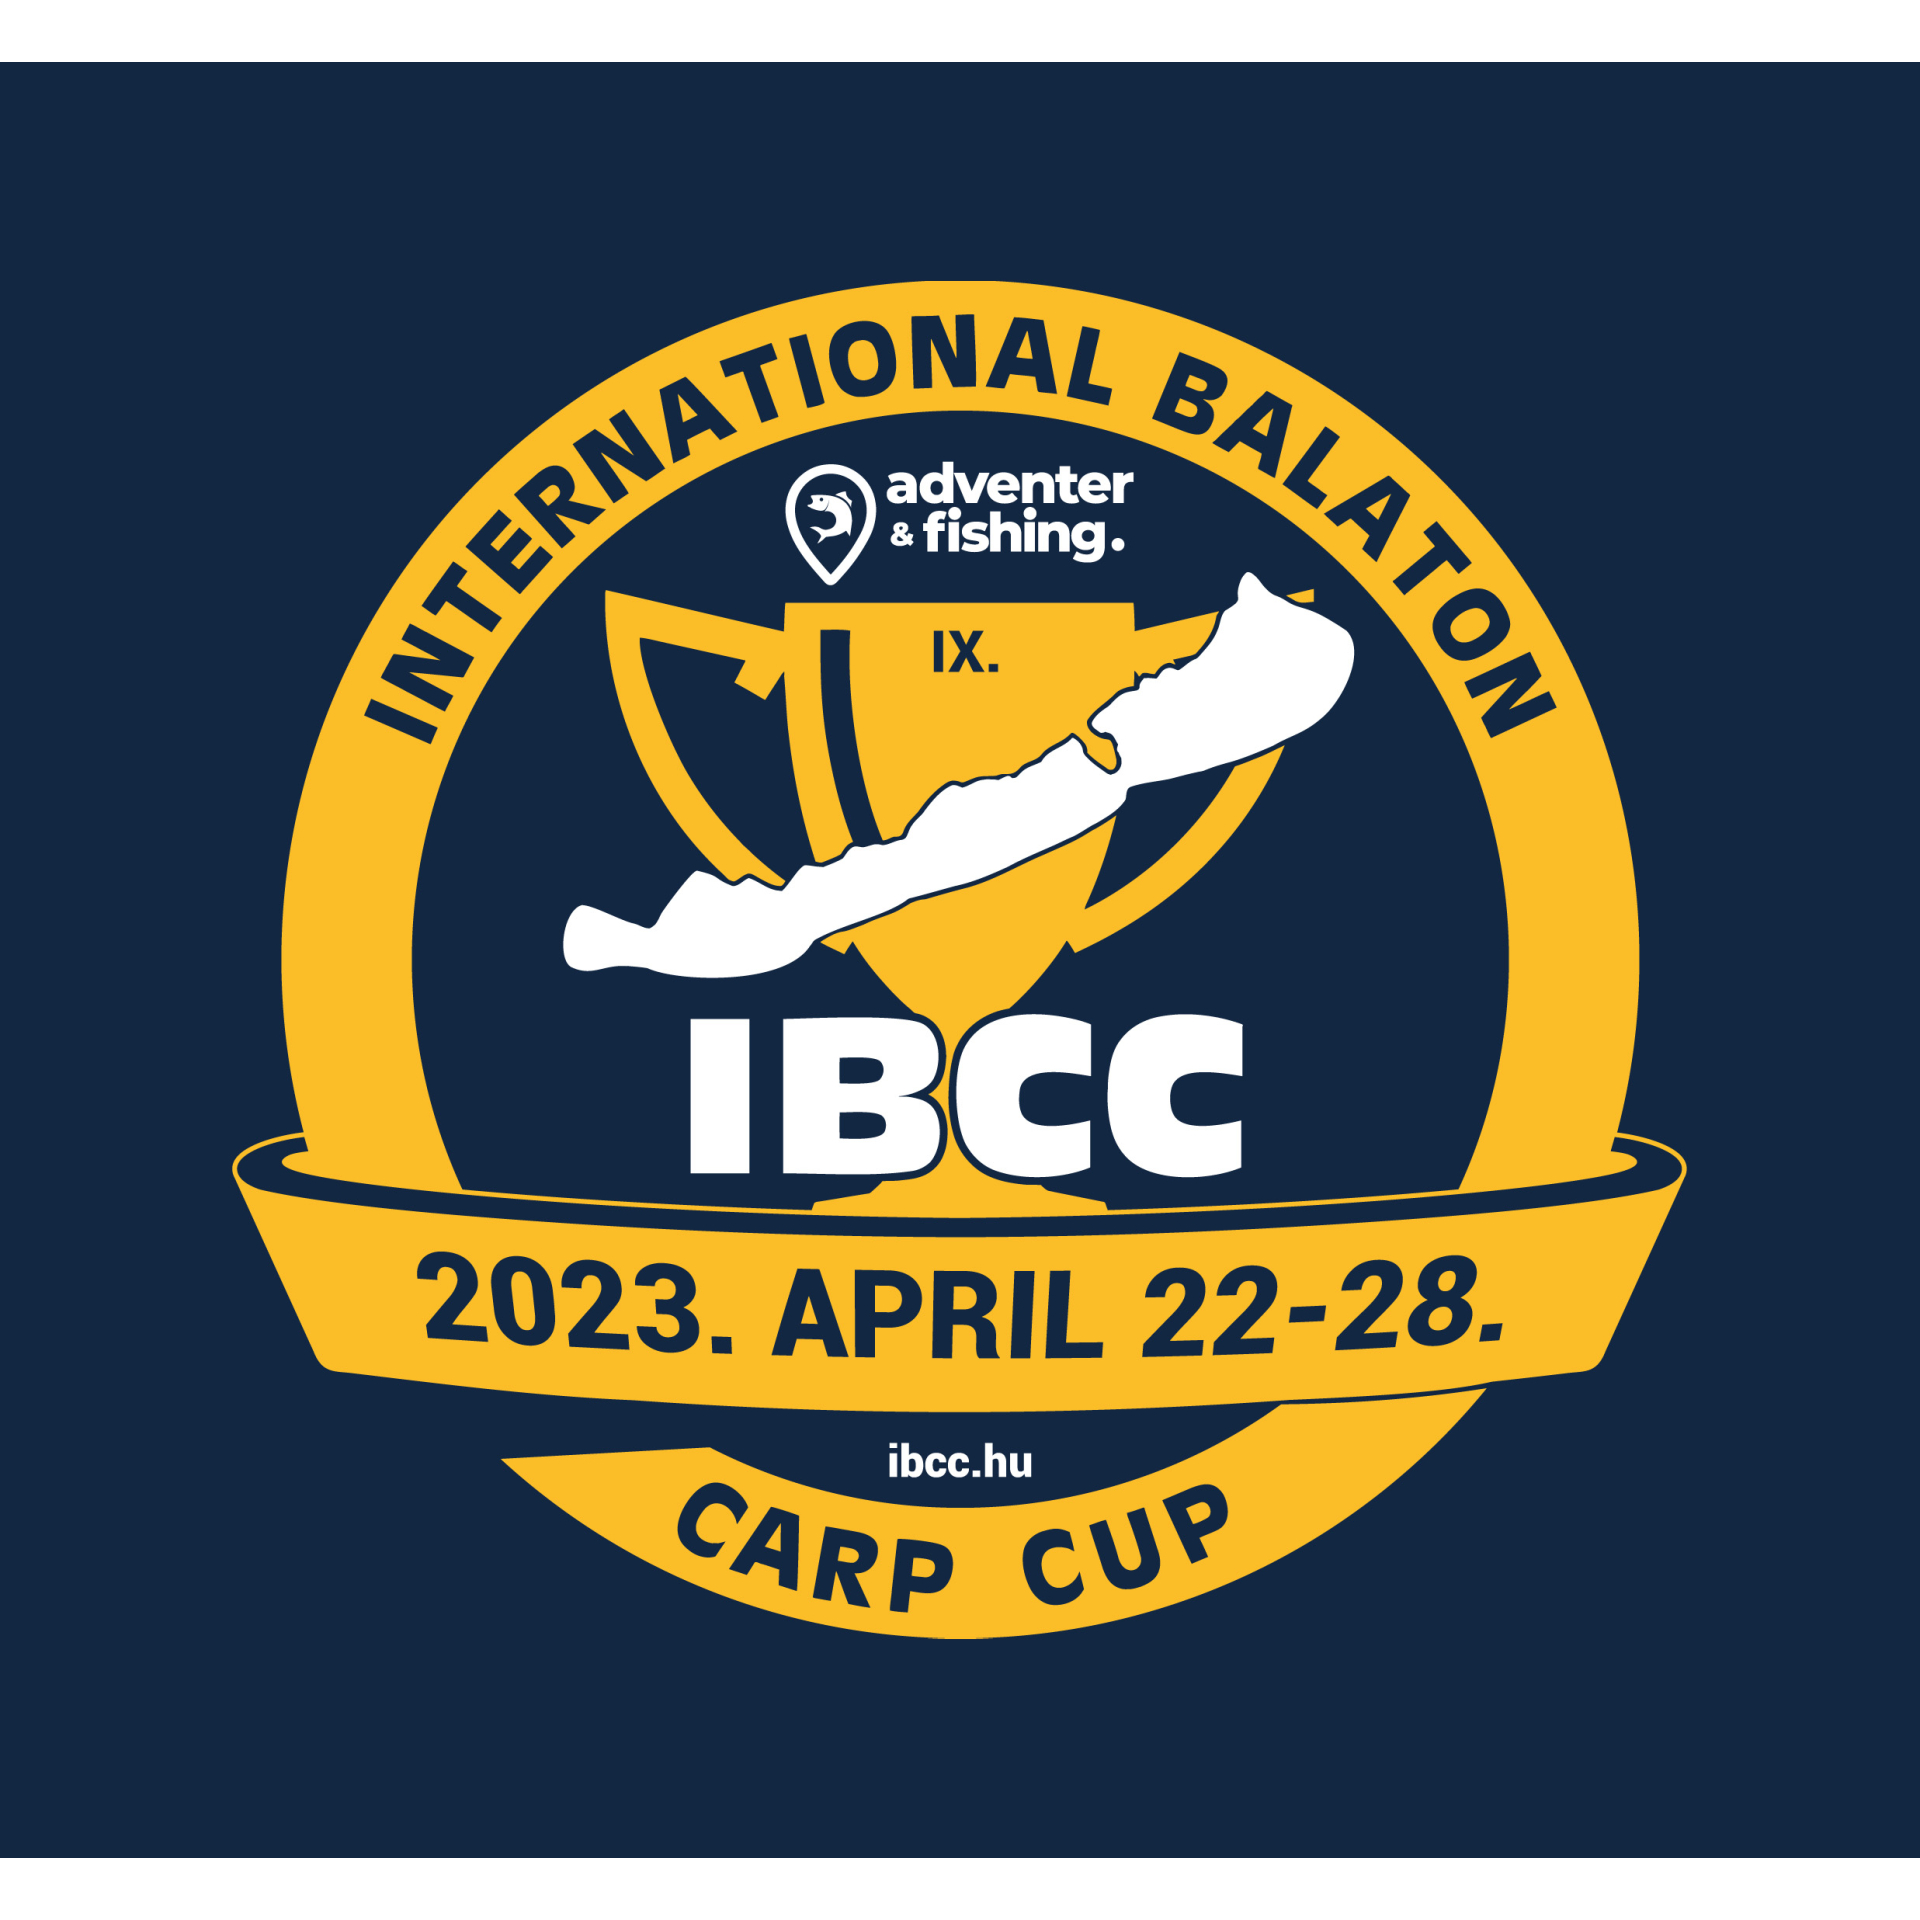 Adventer & fishing International Balaton Carp Cup